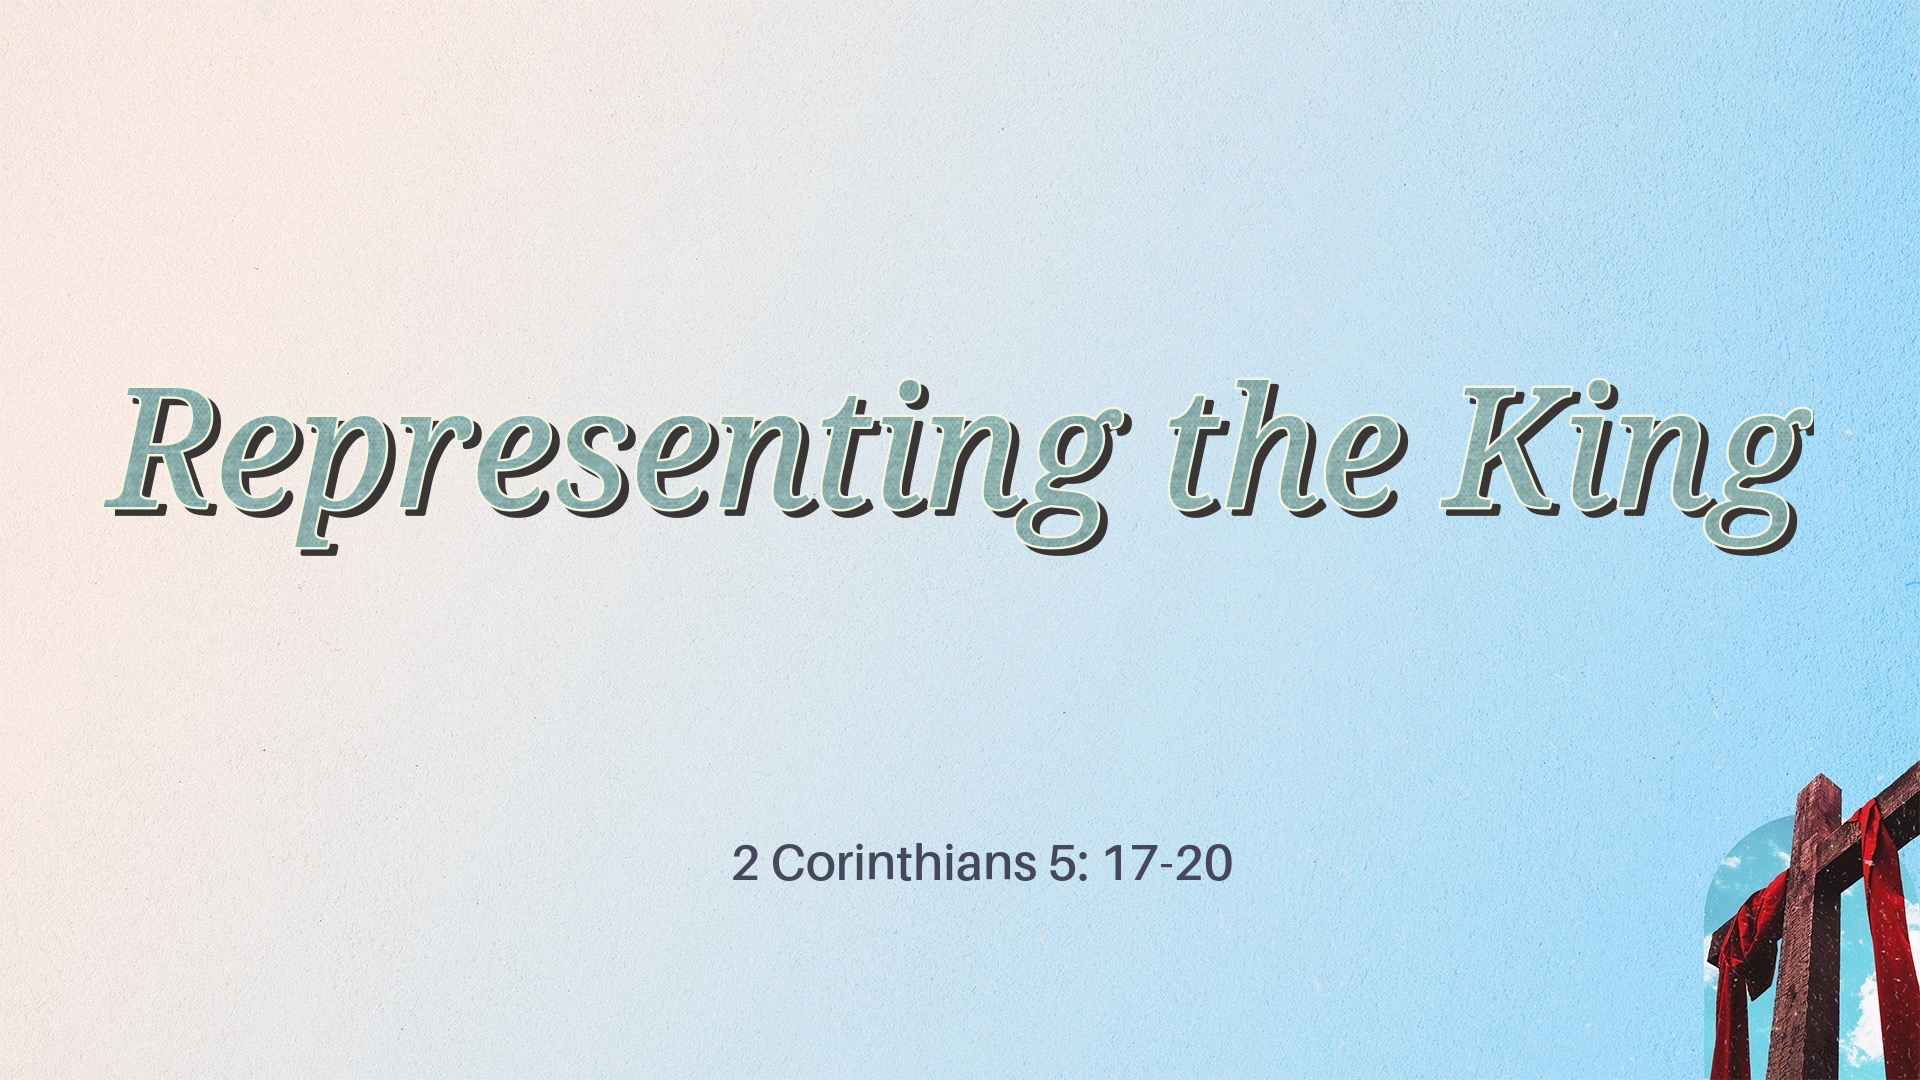 Mar 27, 2022 - Representing the King (Video) - 2 Corinthians 5: 17-20